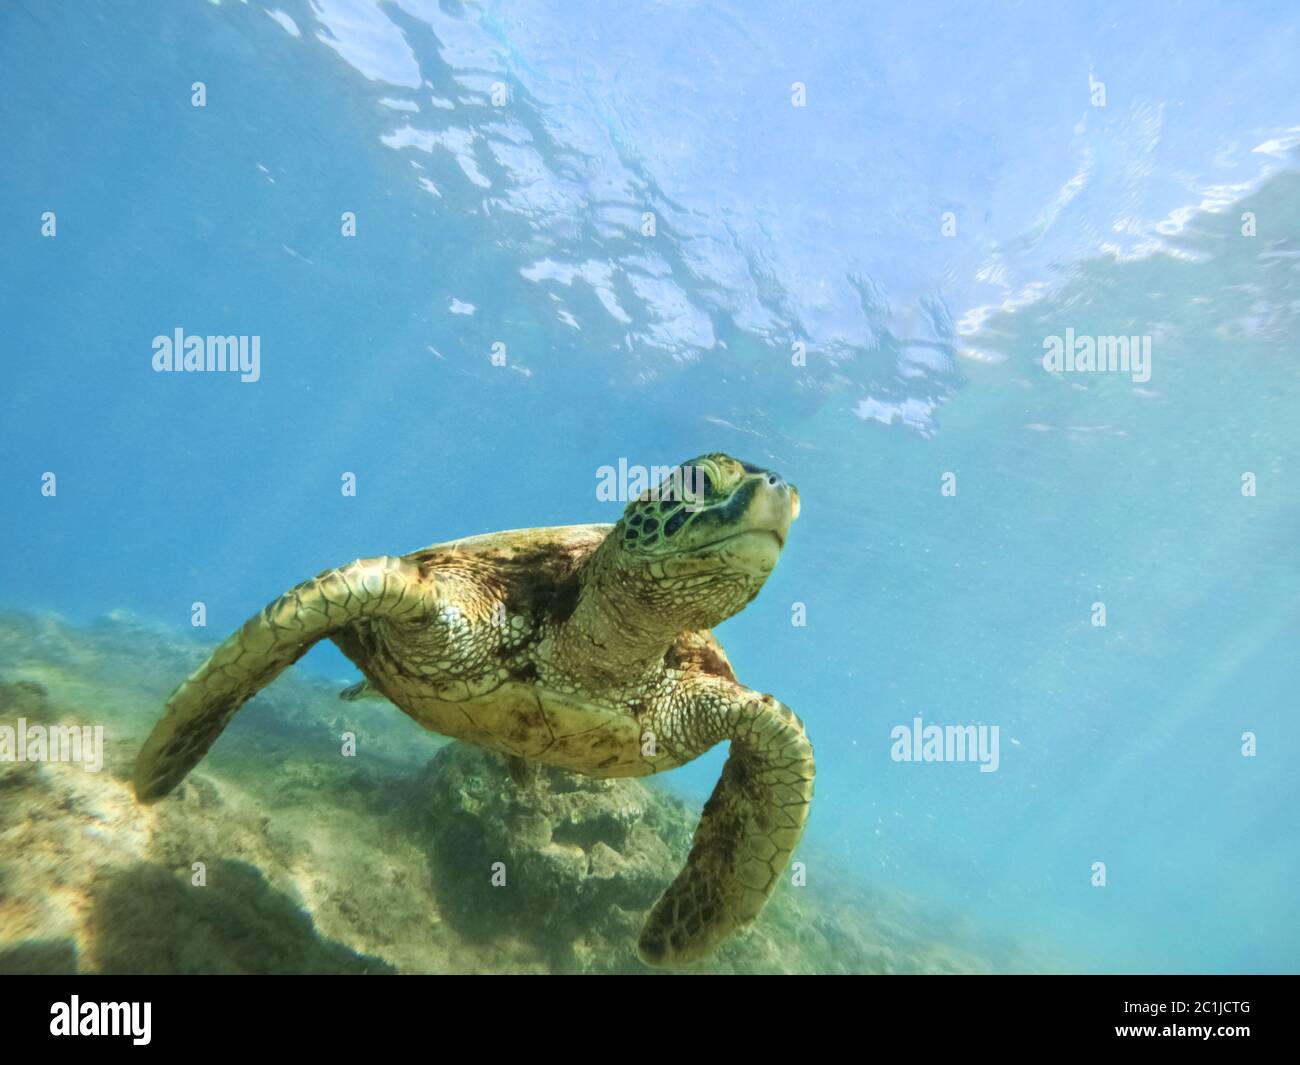 Tartaruga marina verde sopra la barriera corallina fotografia subacquea Foto Stock